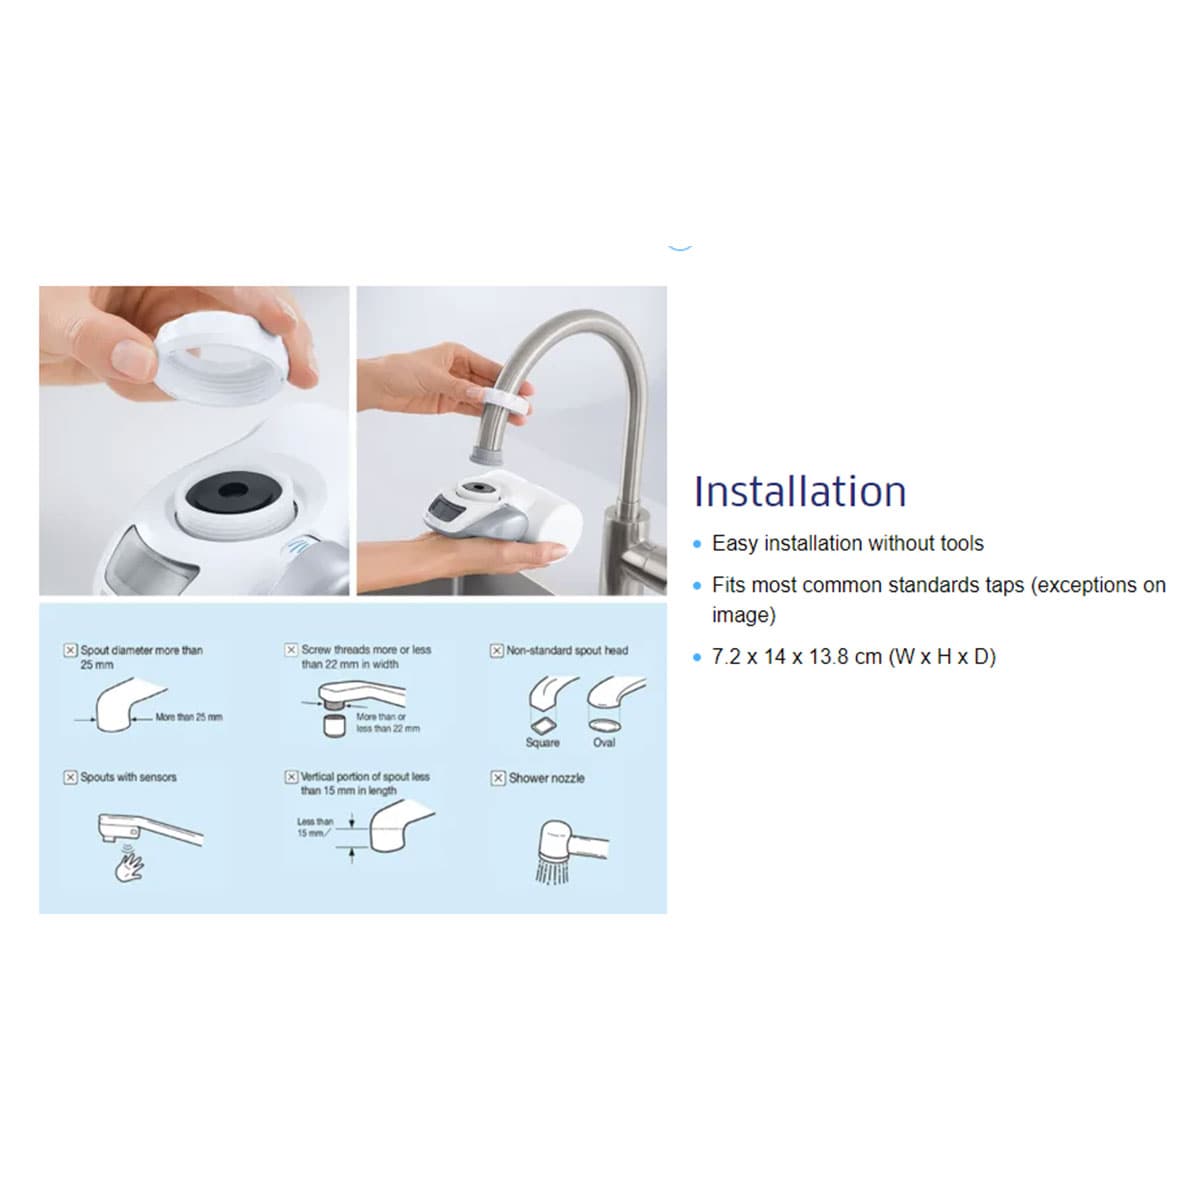 Brita Advanced On-Tap Water Filter System